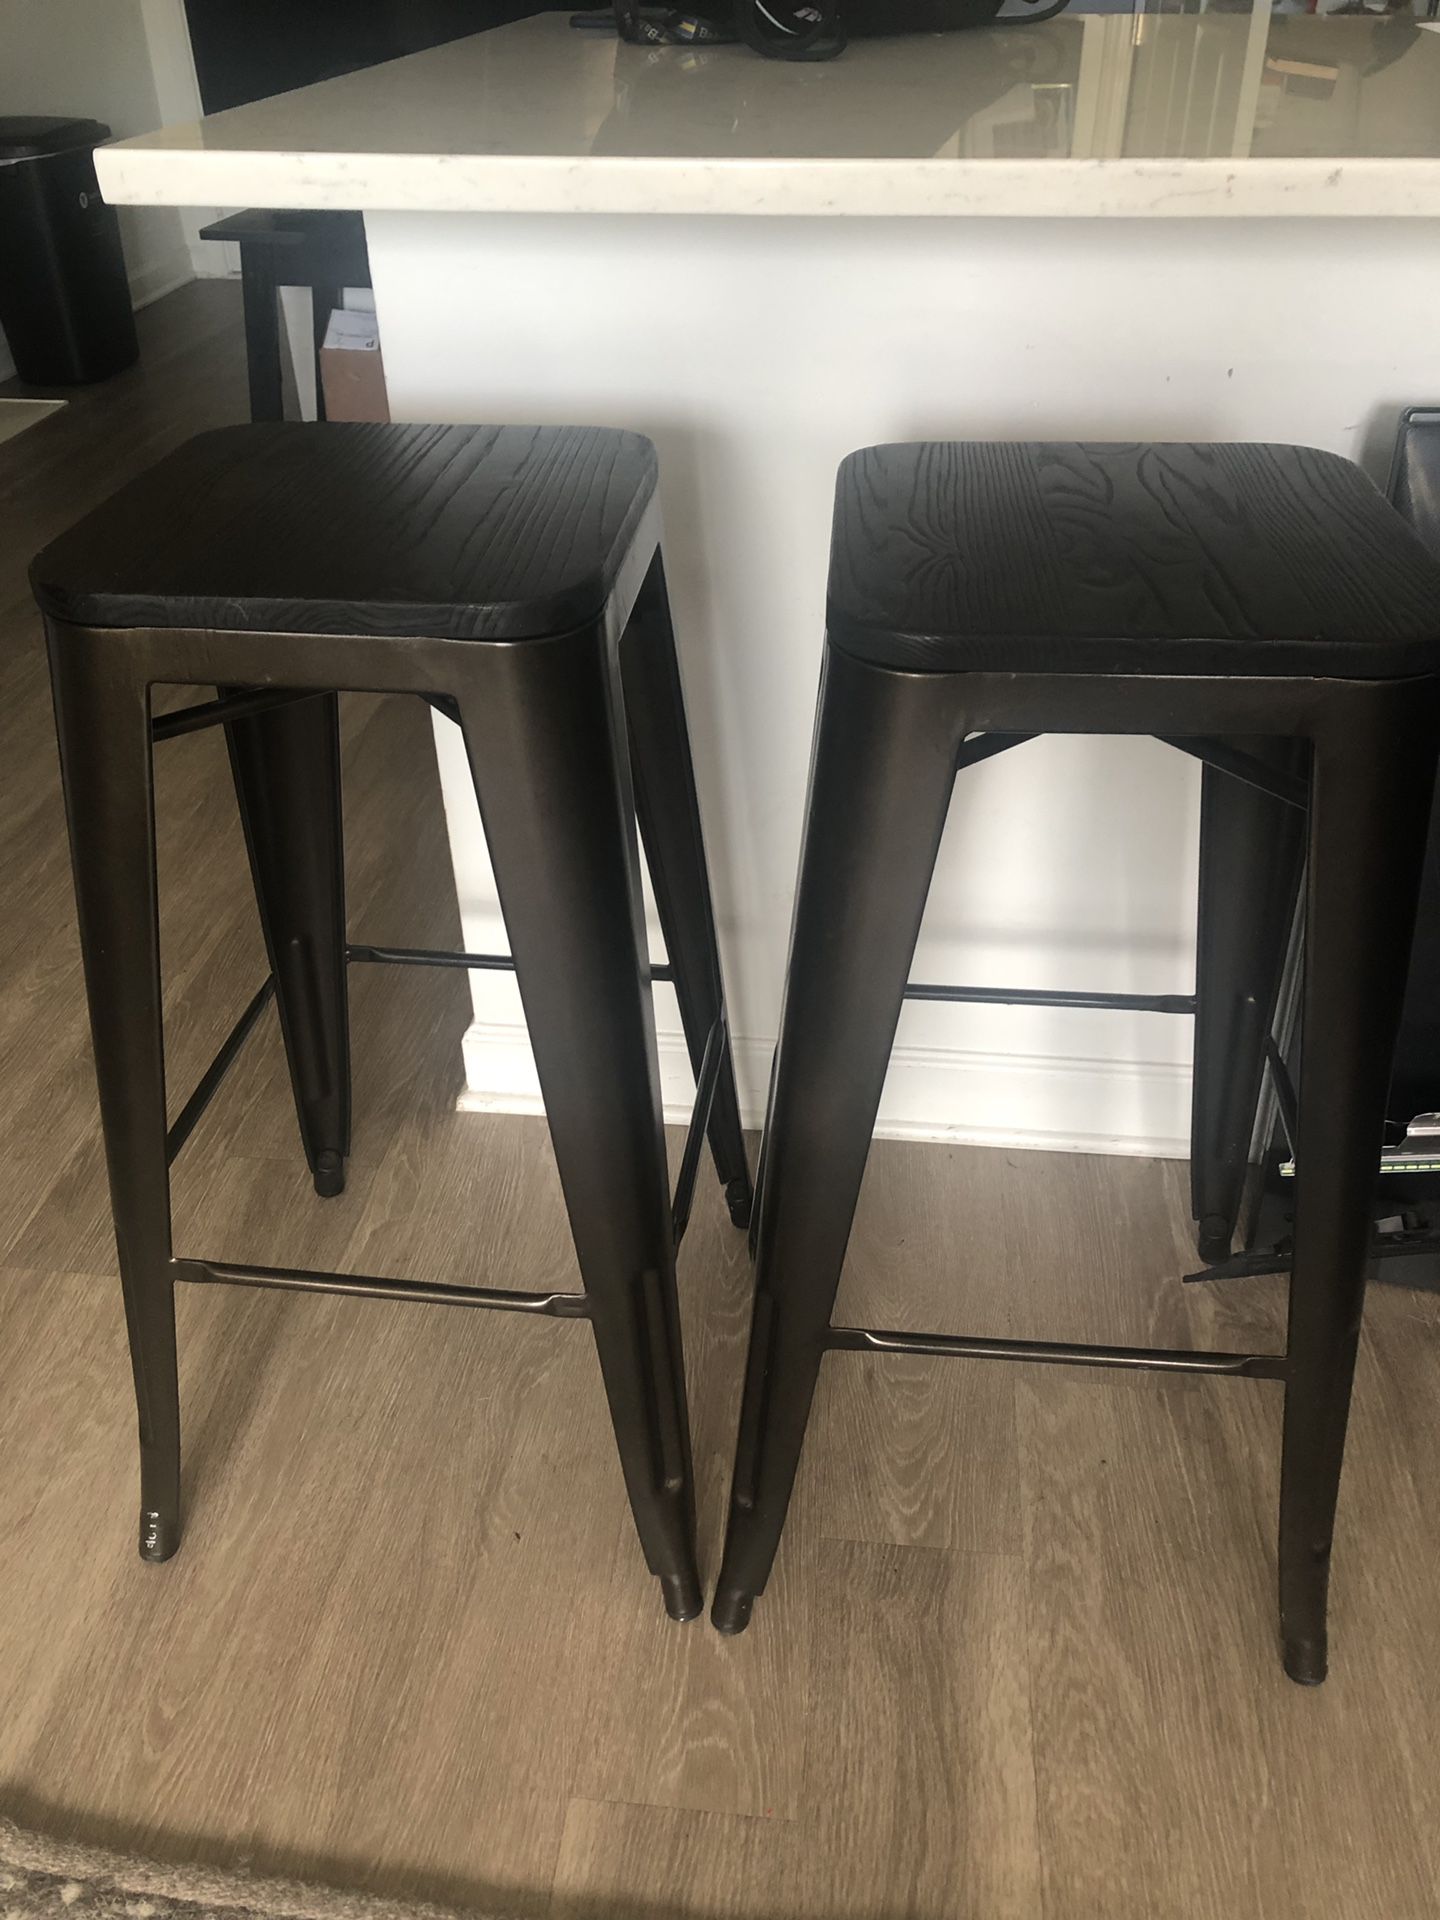 2 Metal bar stools, wood top